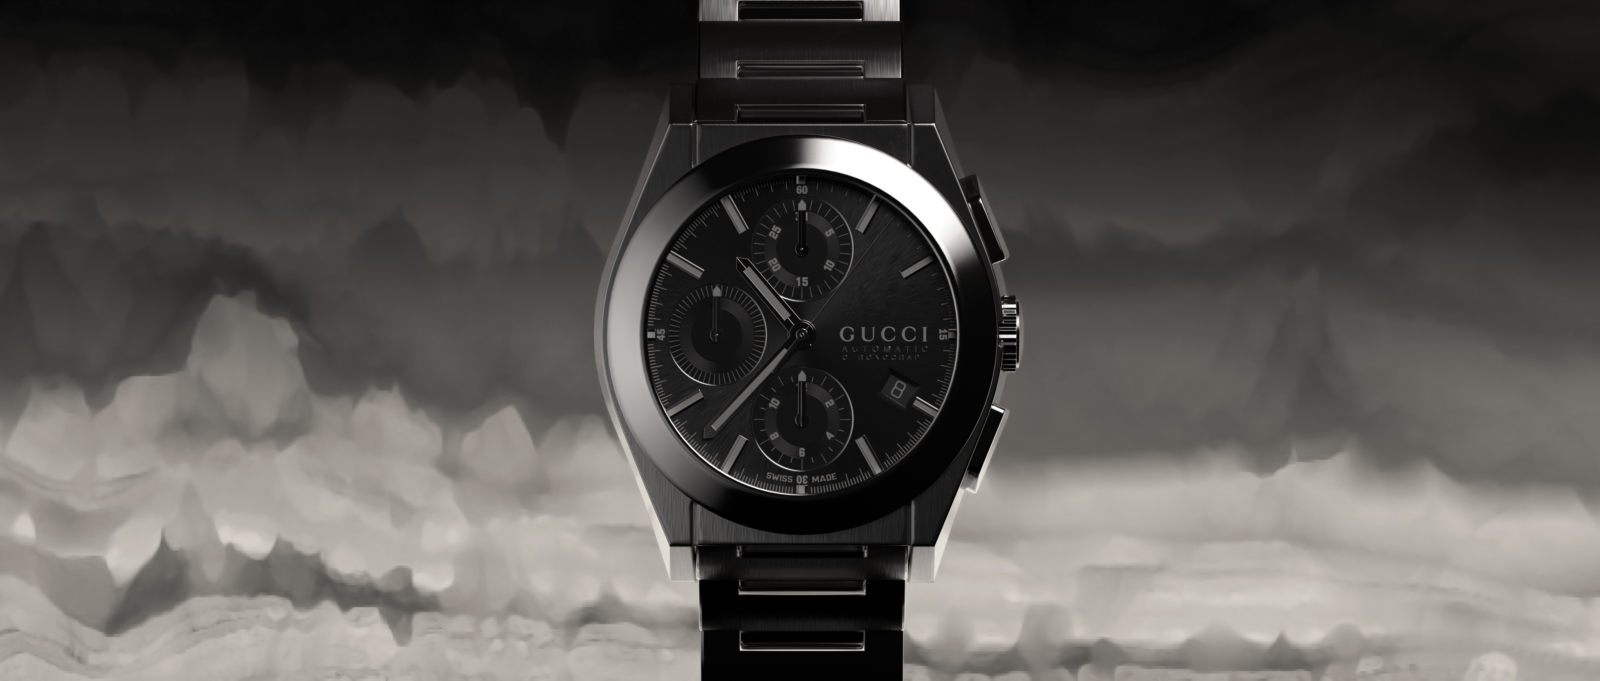 Gucci Watch Gunmetal Against Clouds